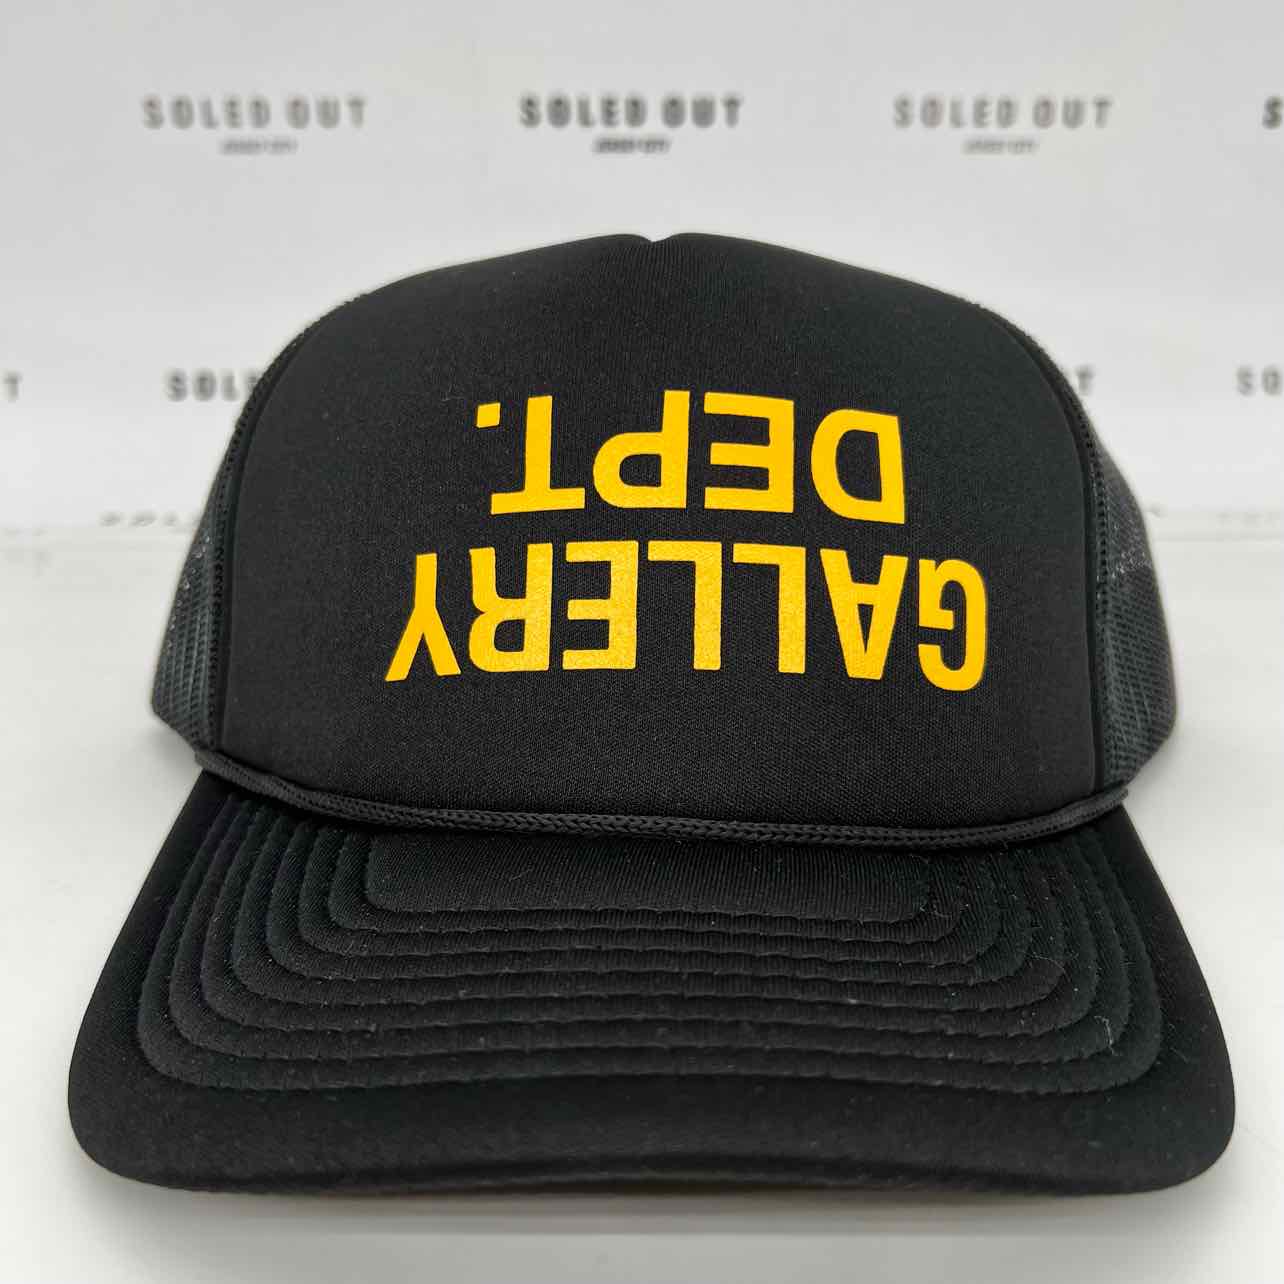 Gallery DEPT. Trucker Hat "UPSIDE DOWN LOGO" New Black Size OS